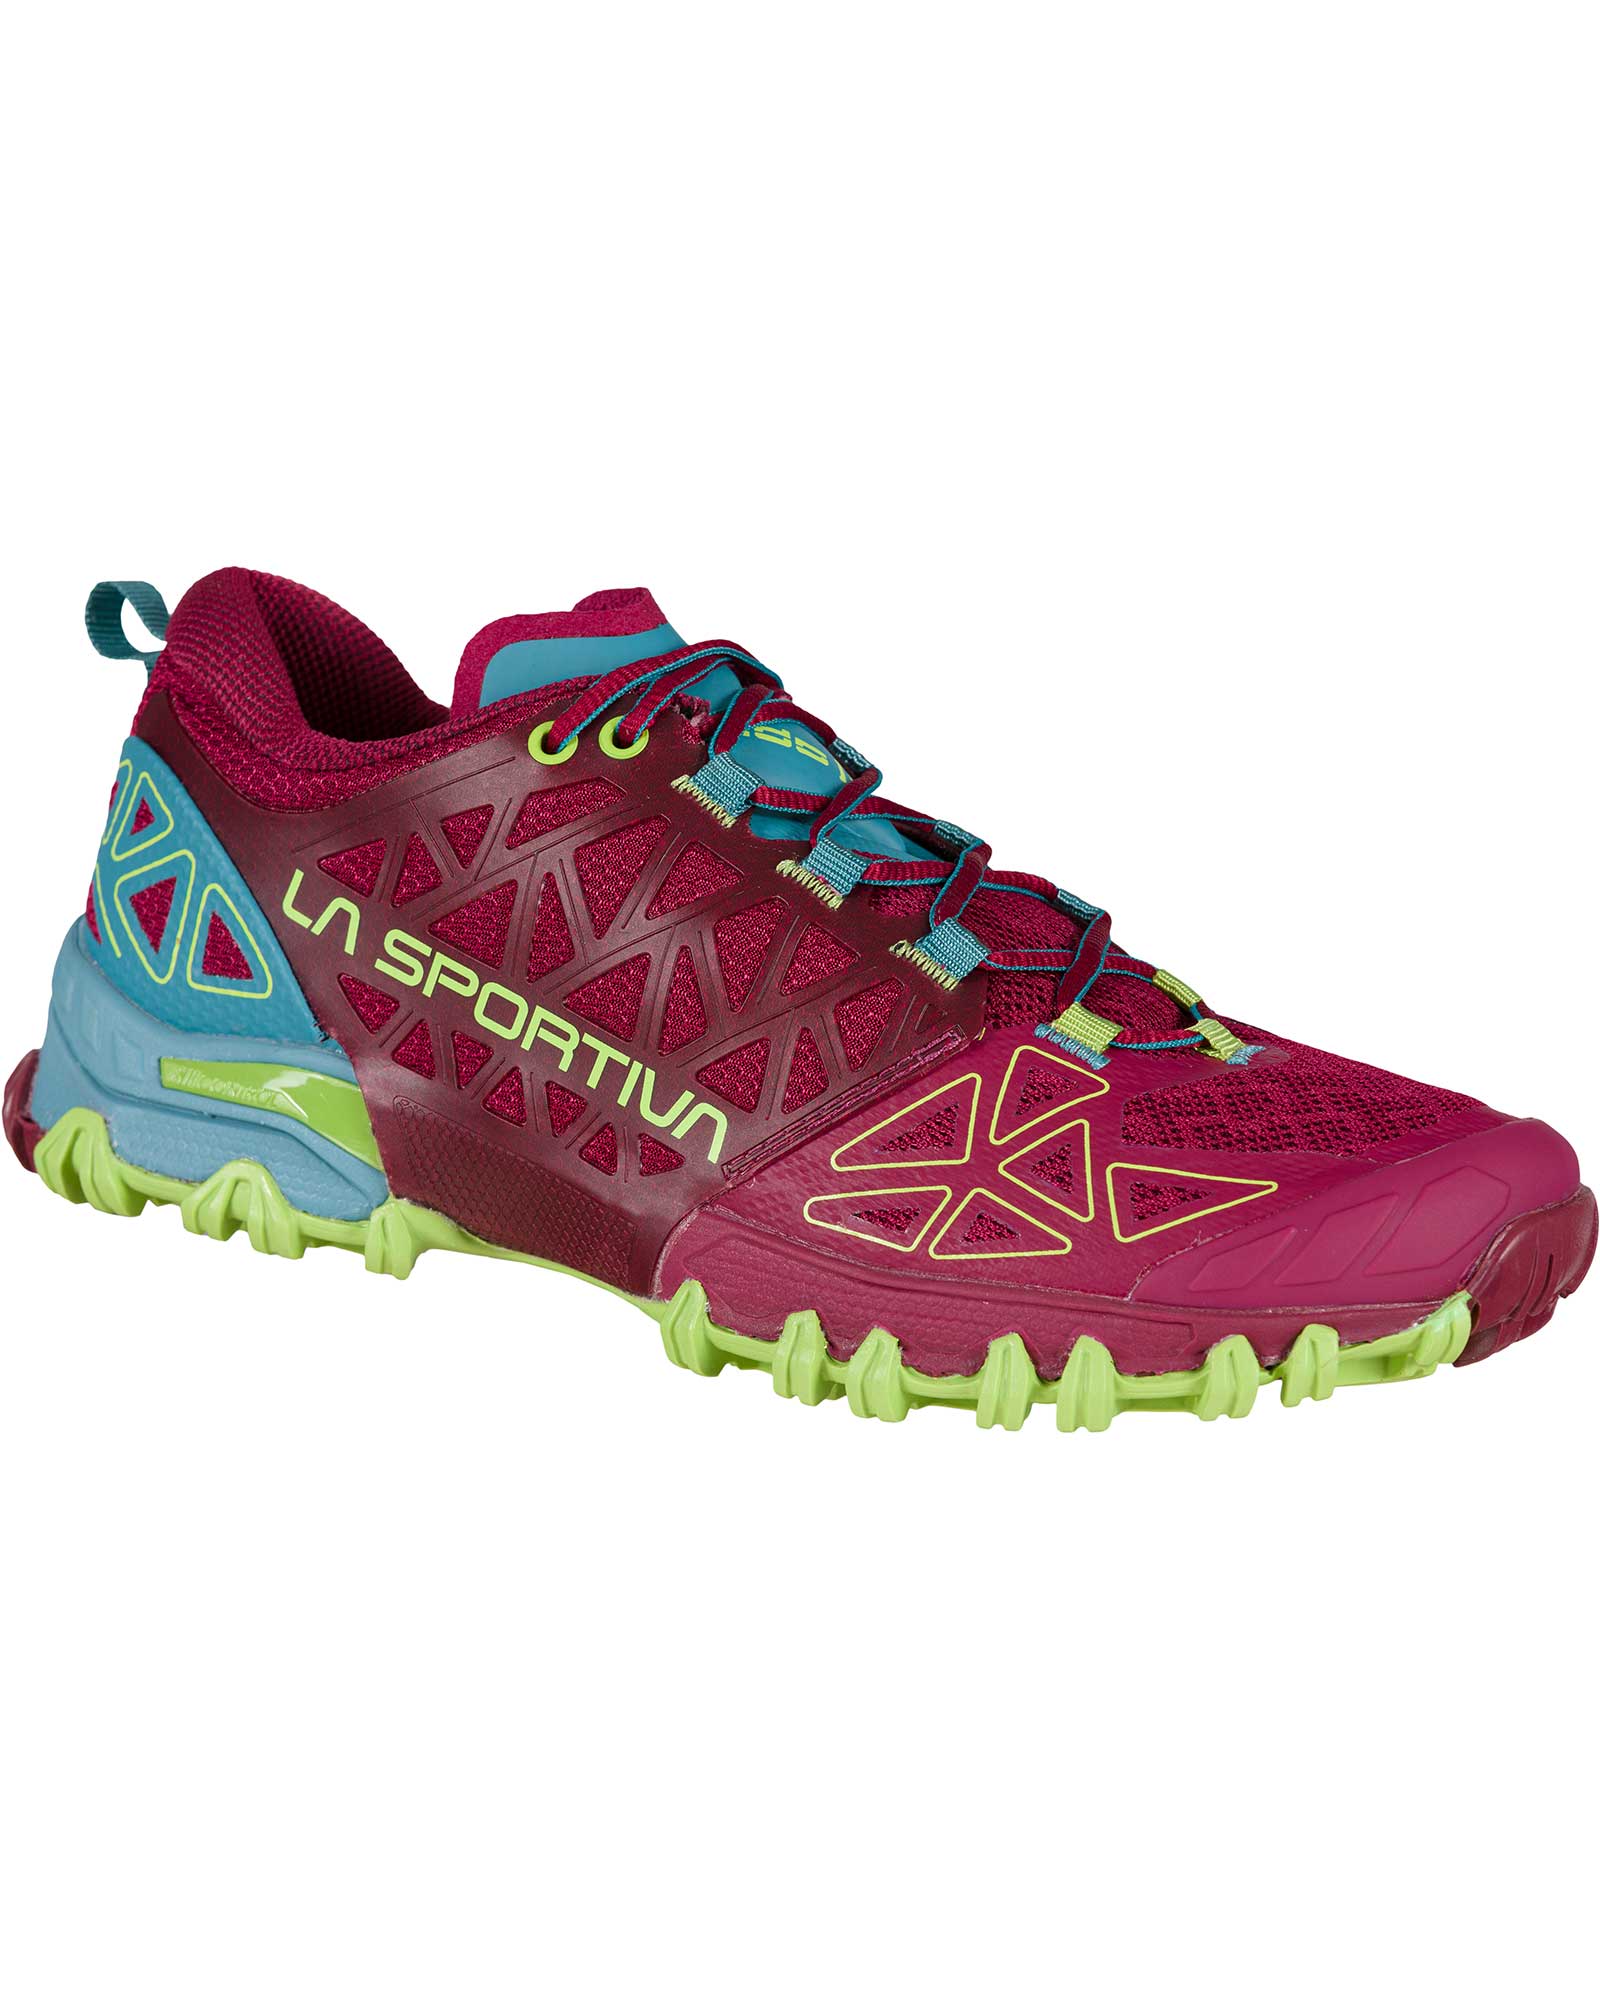 La Sportiva Women's Bushido II Trail Running Shoes